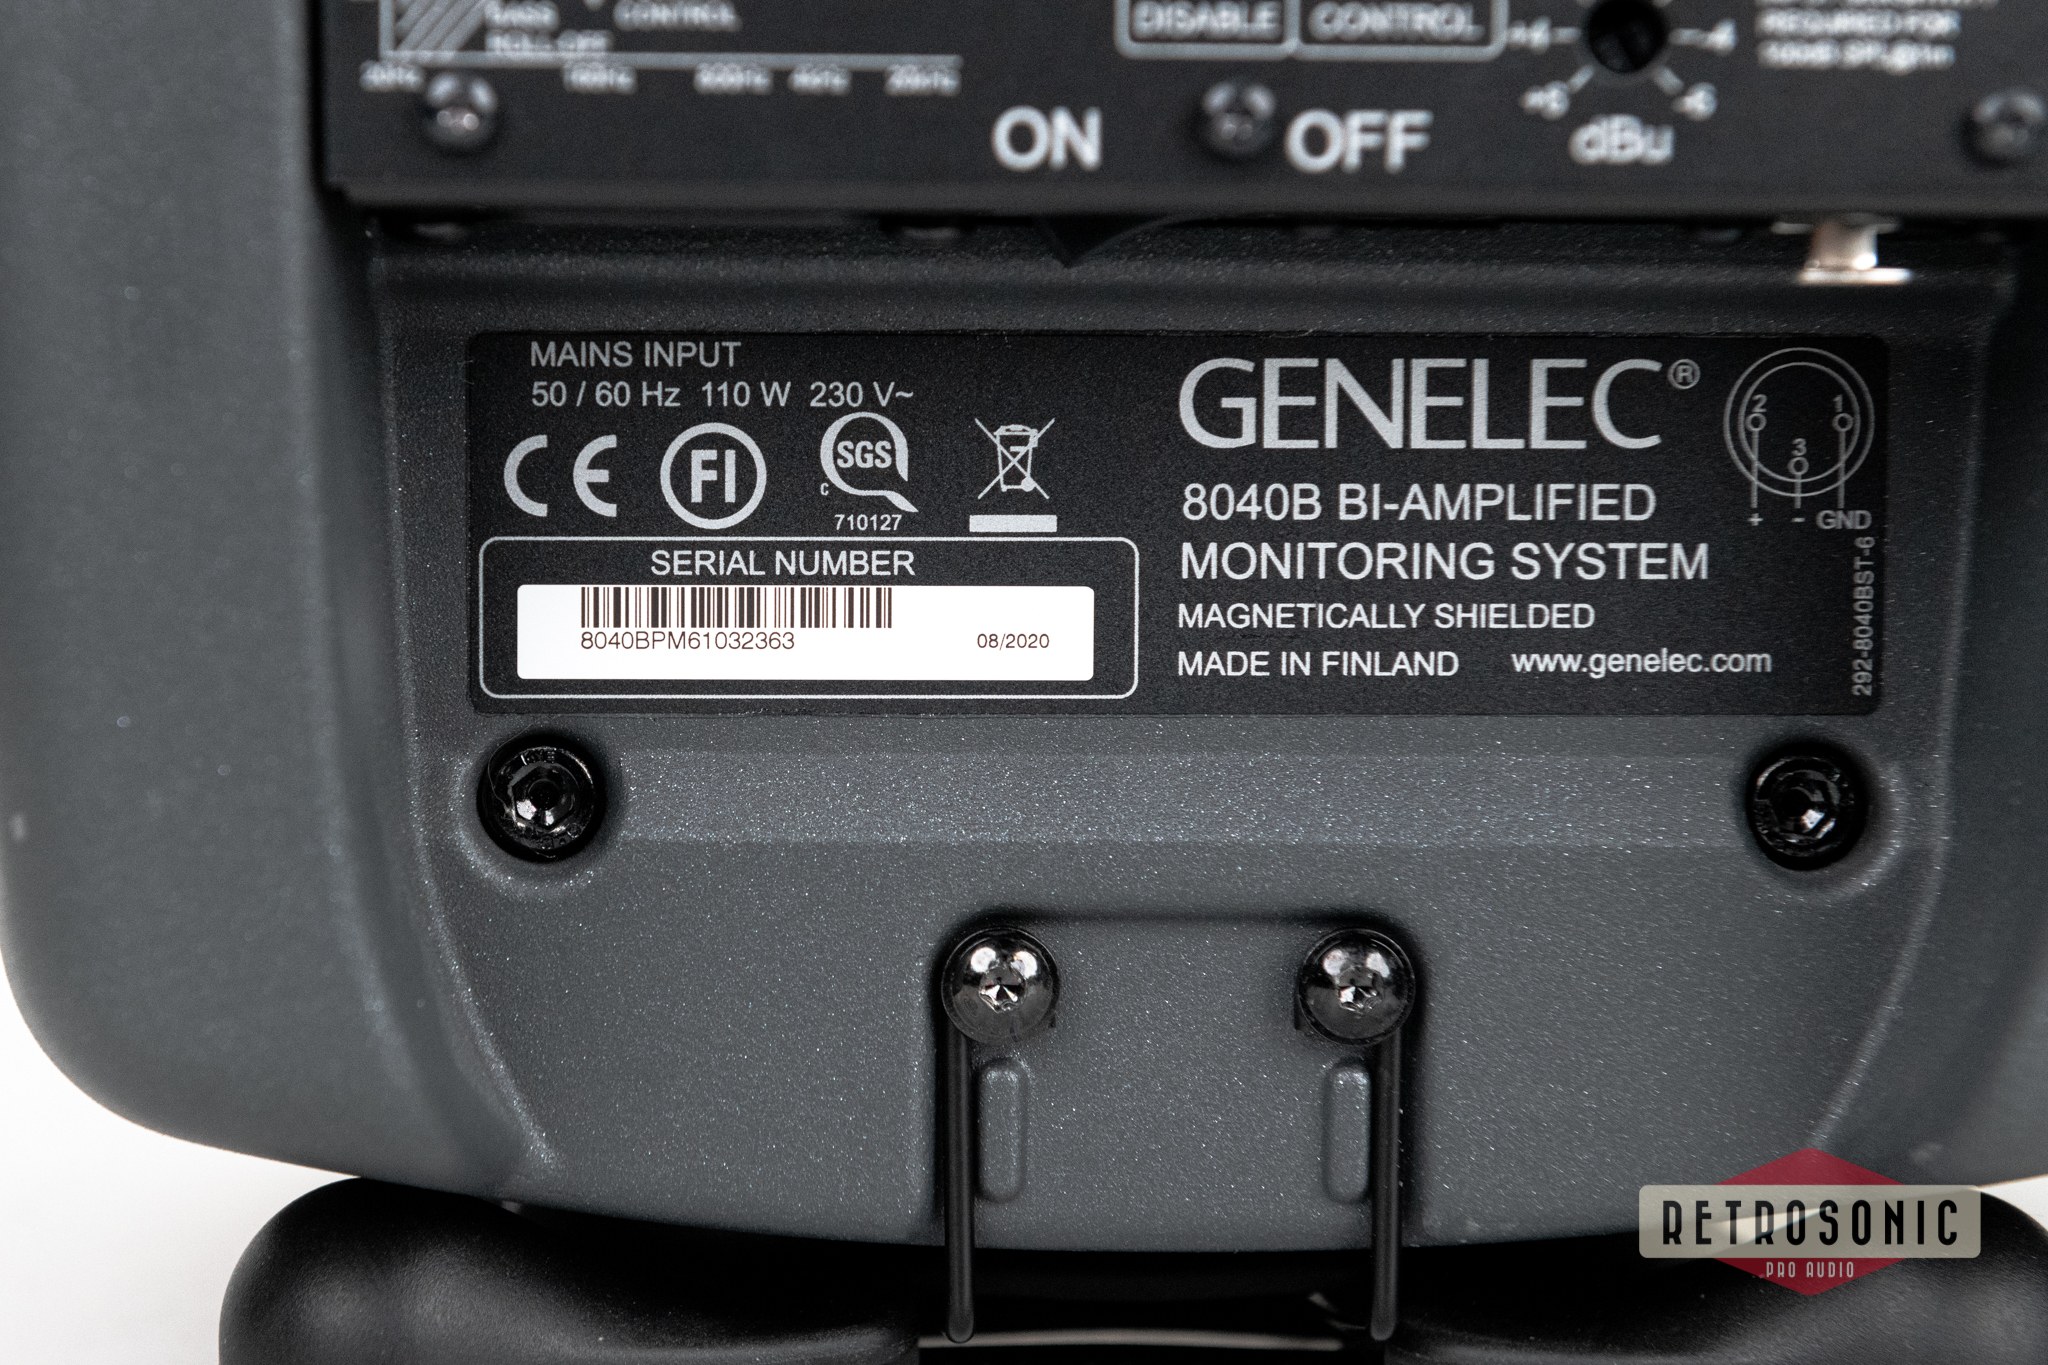 Genelec 8040A Active Studio Monitor pair